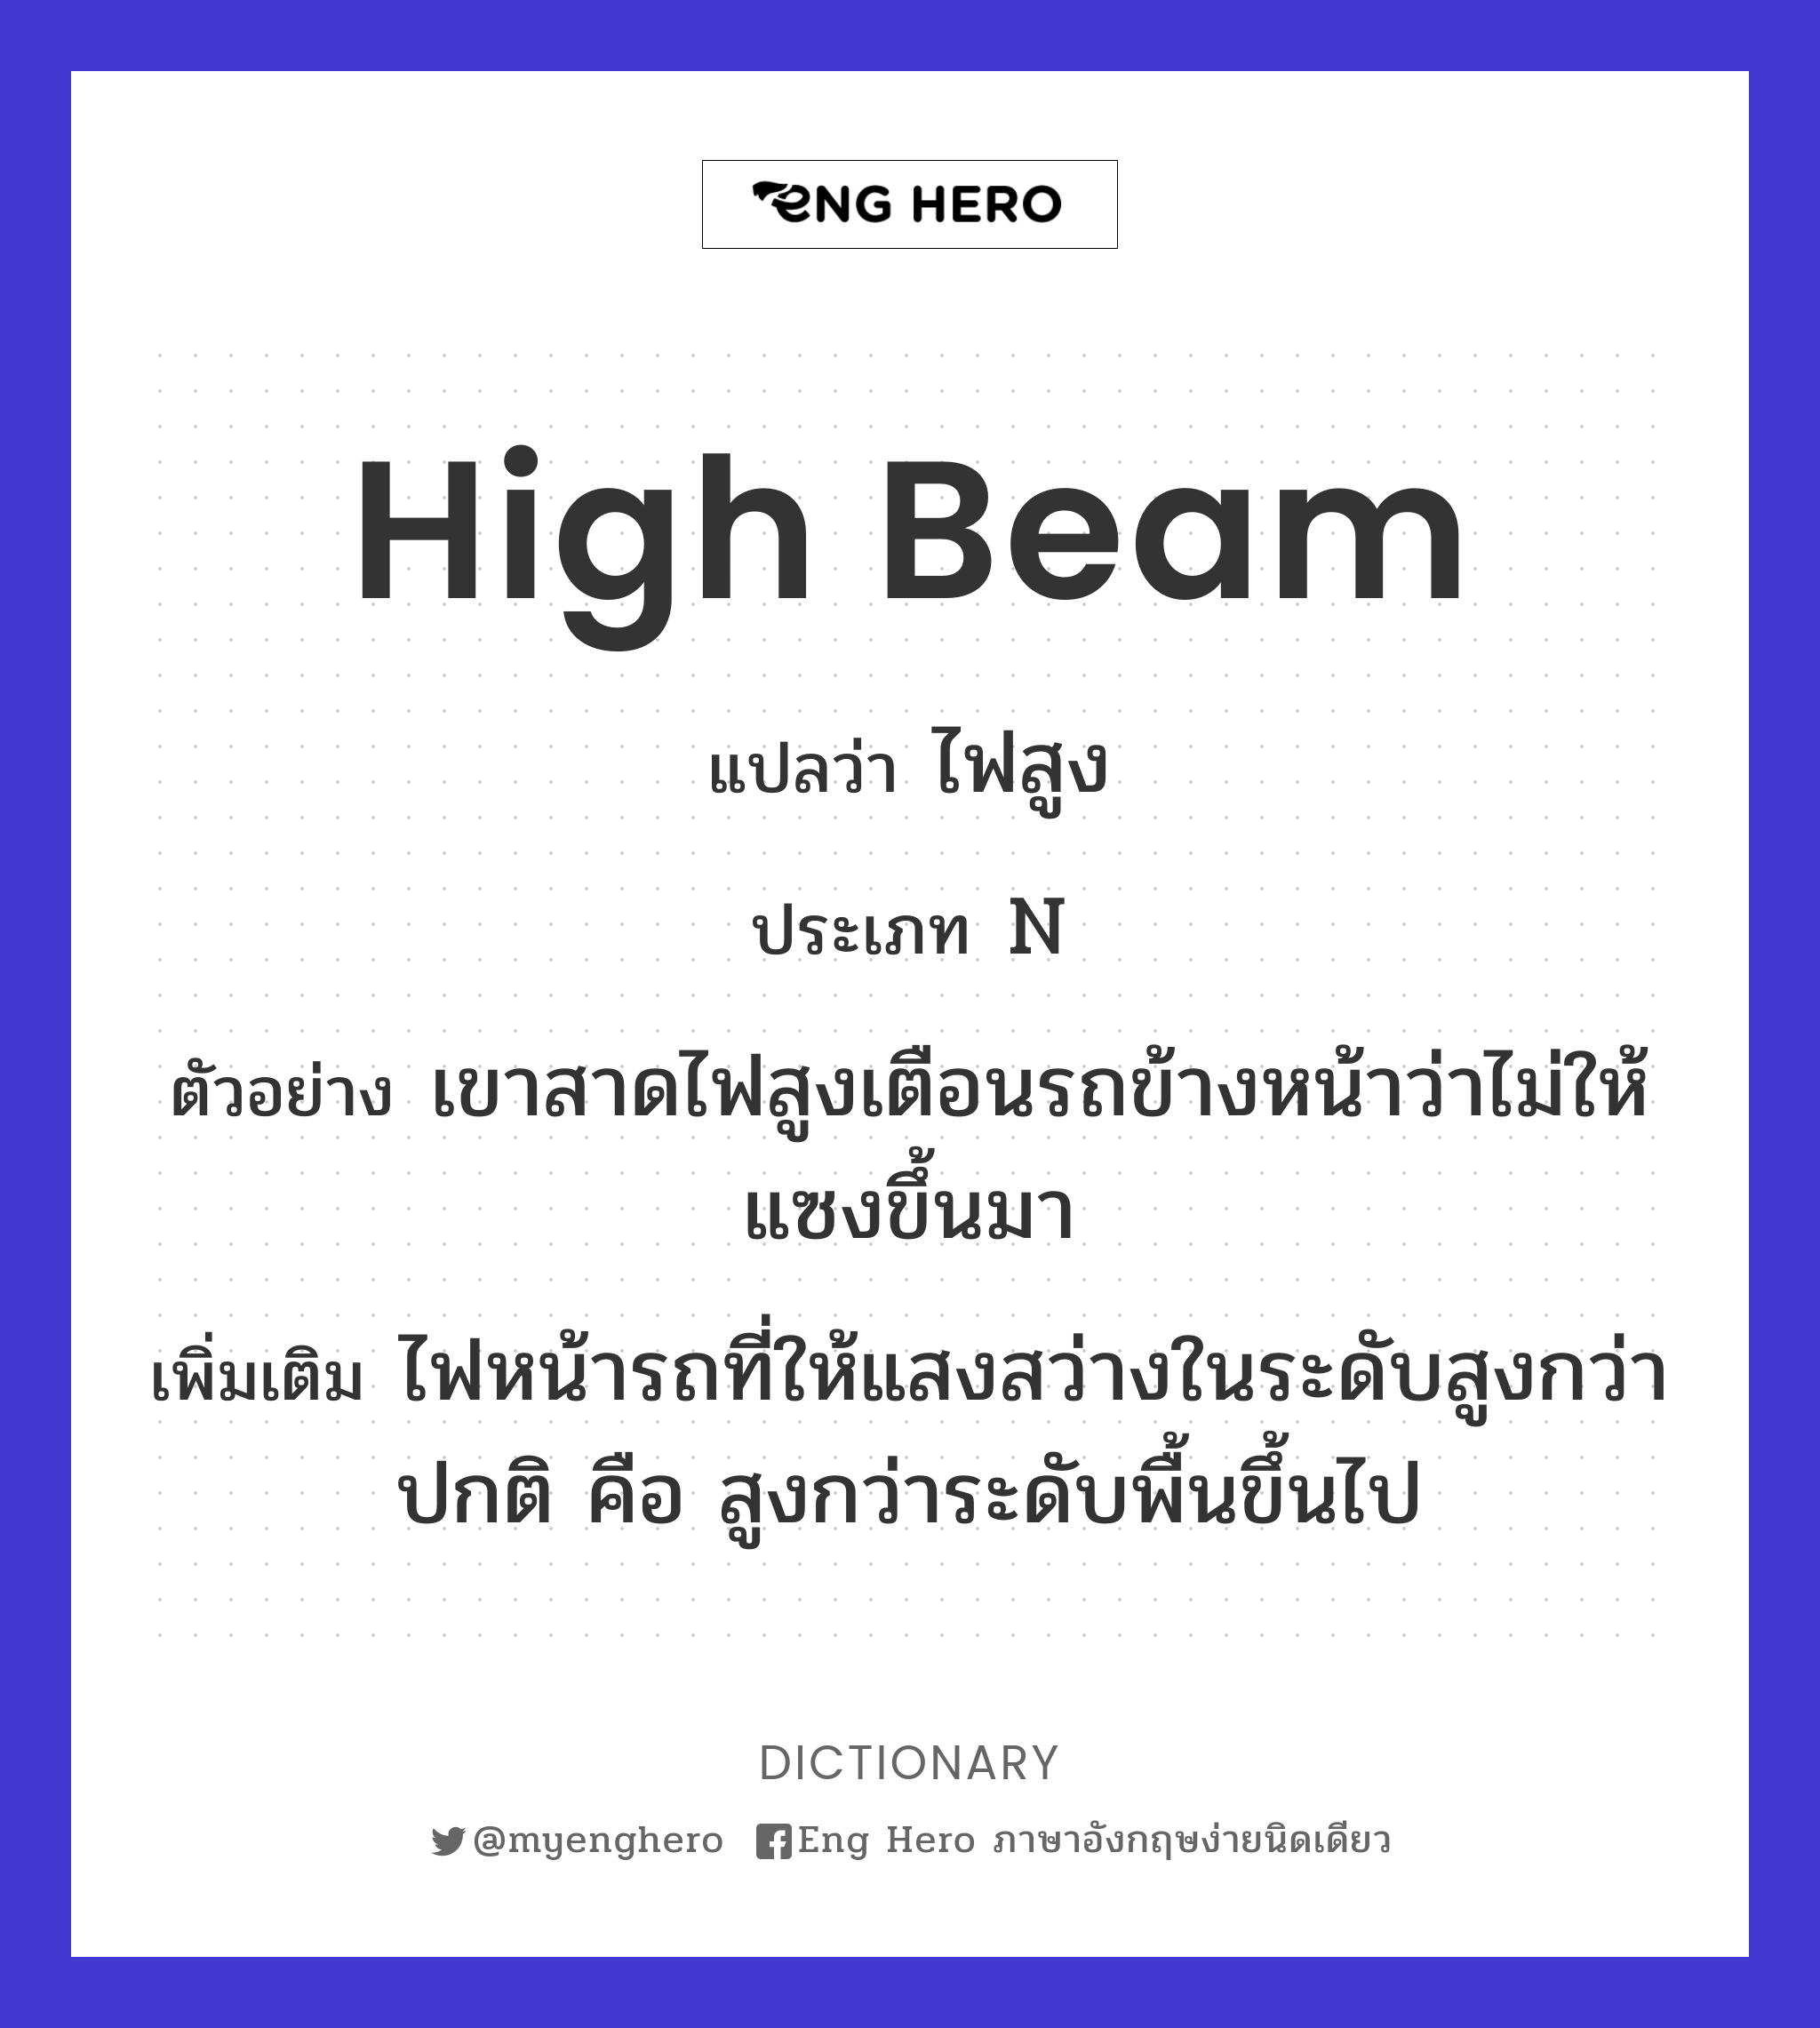 high beam